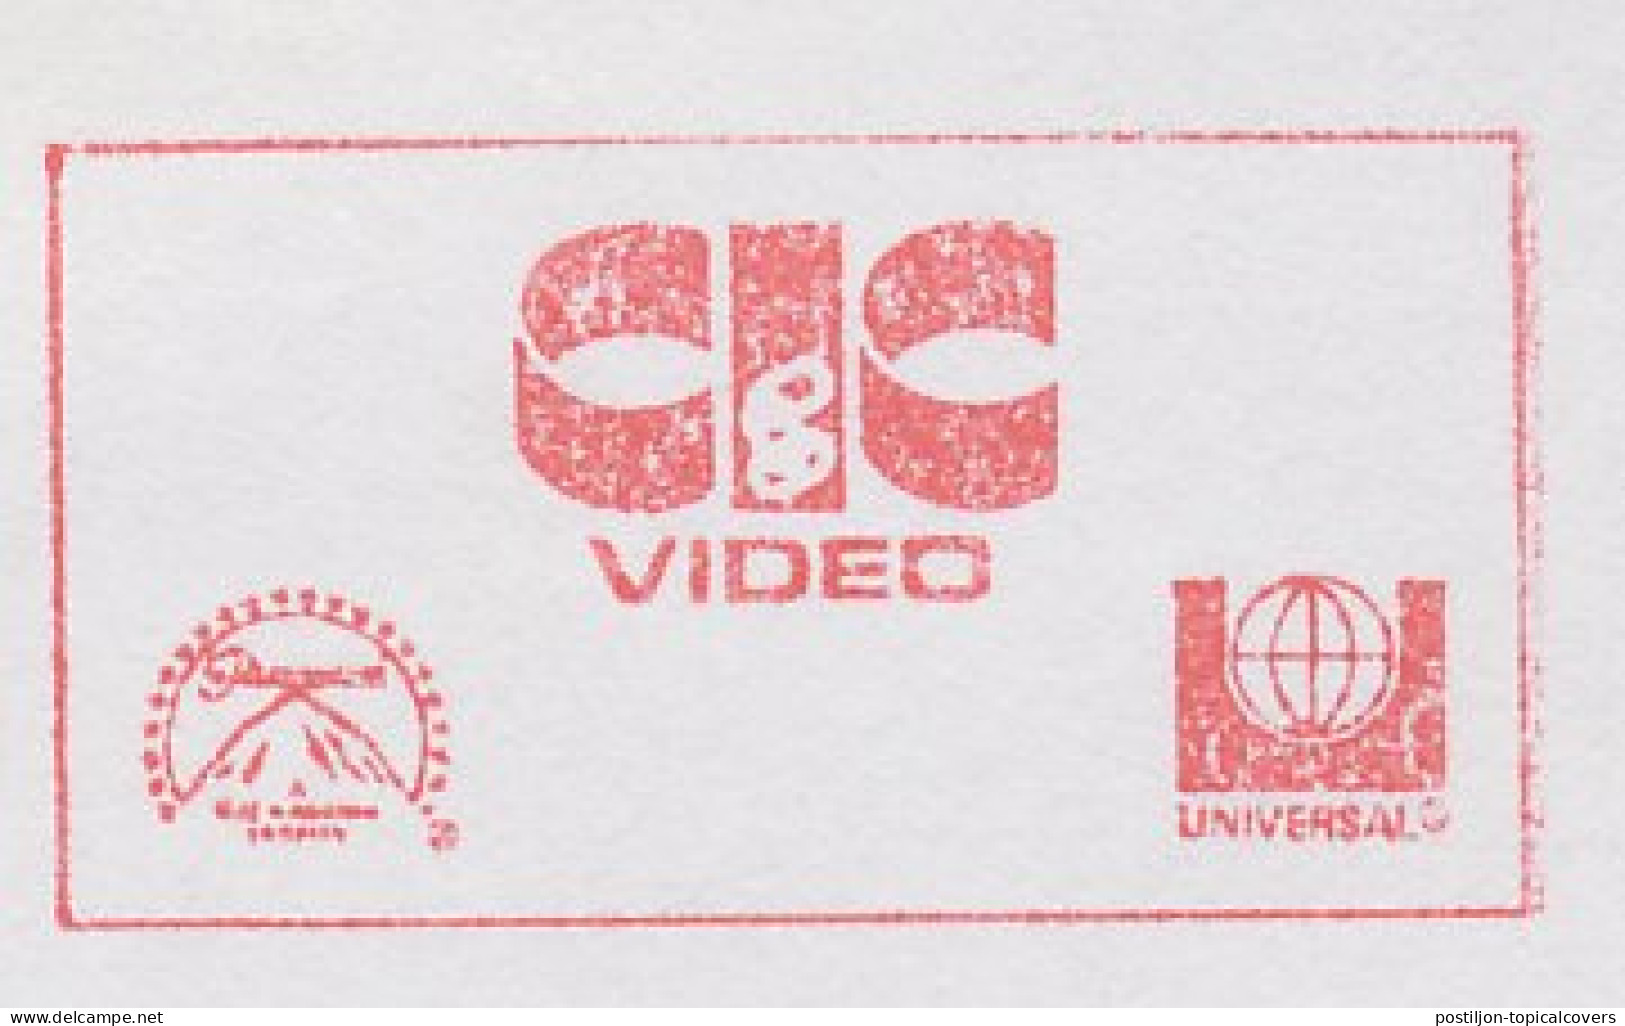 Meter Cut Netherlands 1992 Video - Universal - Paramount - Cinema